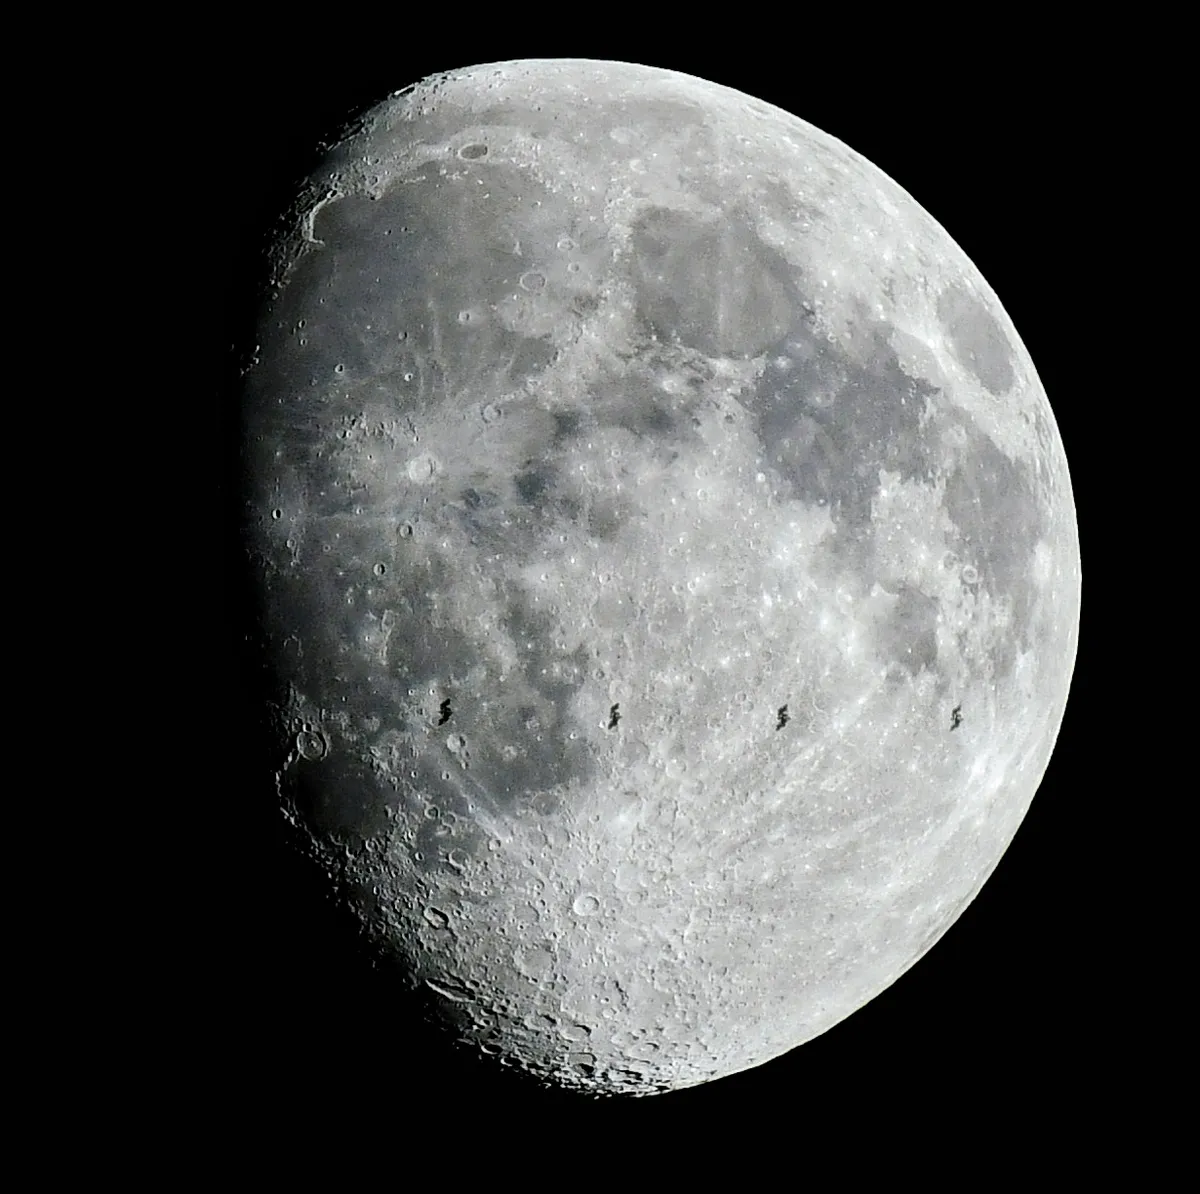 ISS crossing the Moon James Grandfield, Dublin, 24 March 2021. Equipment: Nikon D500 DSLR, Nikon 200–500mm lens